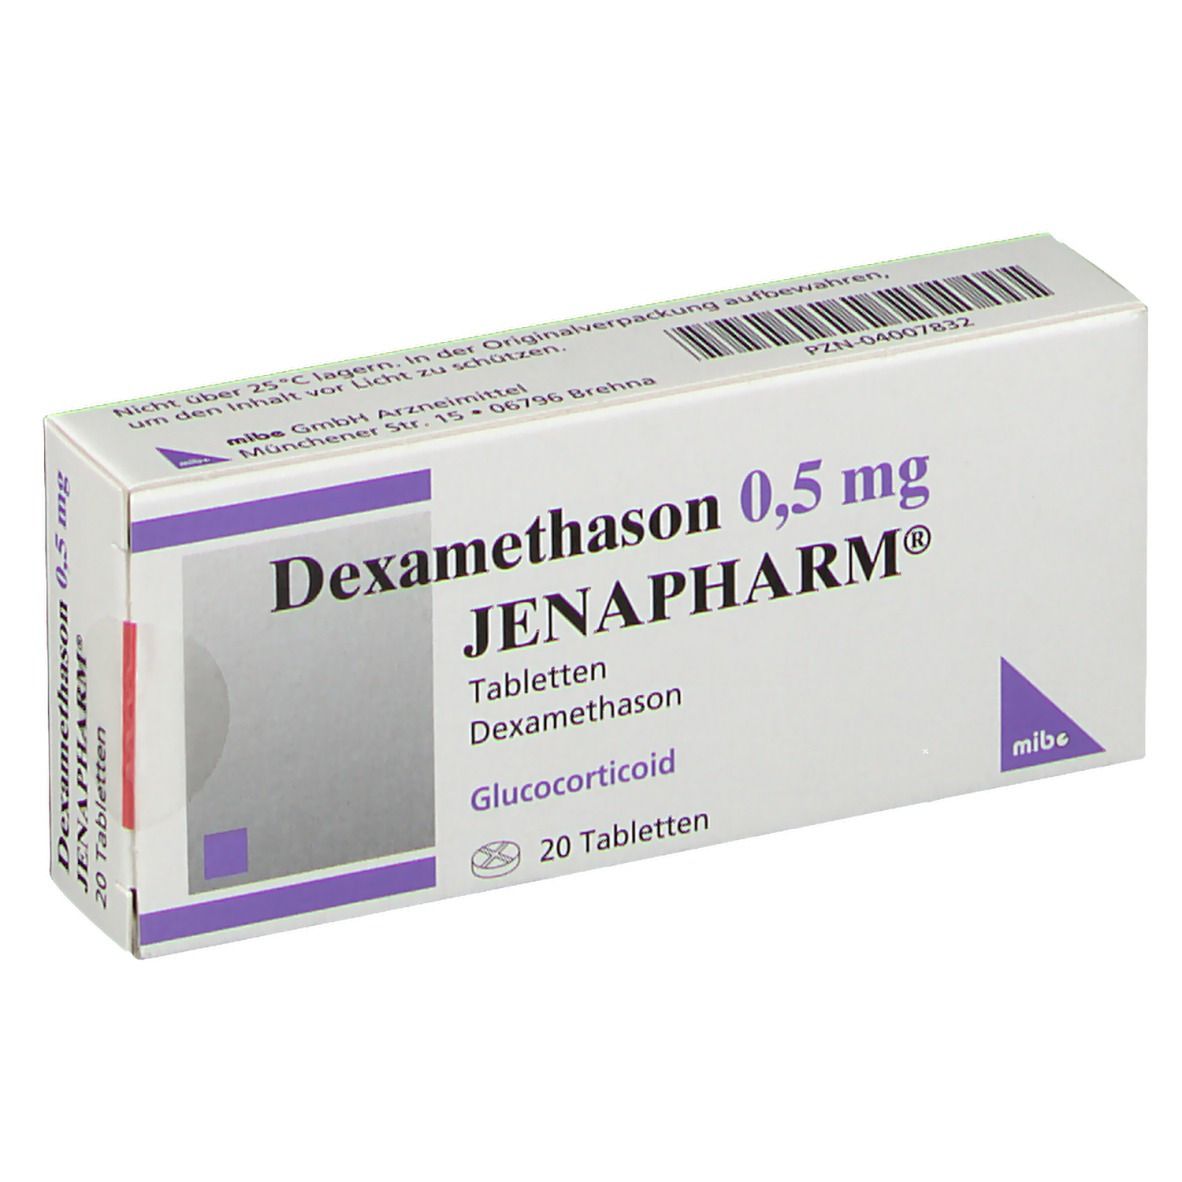 Dexamethason 0,5 mg Jenapharm